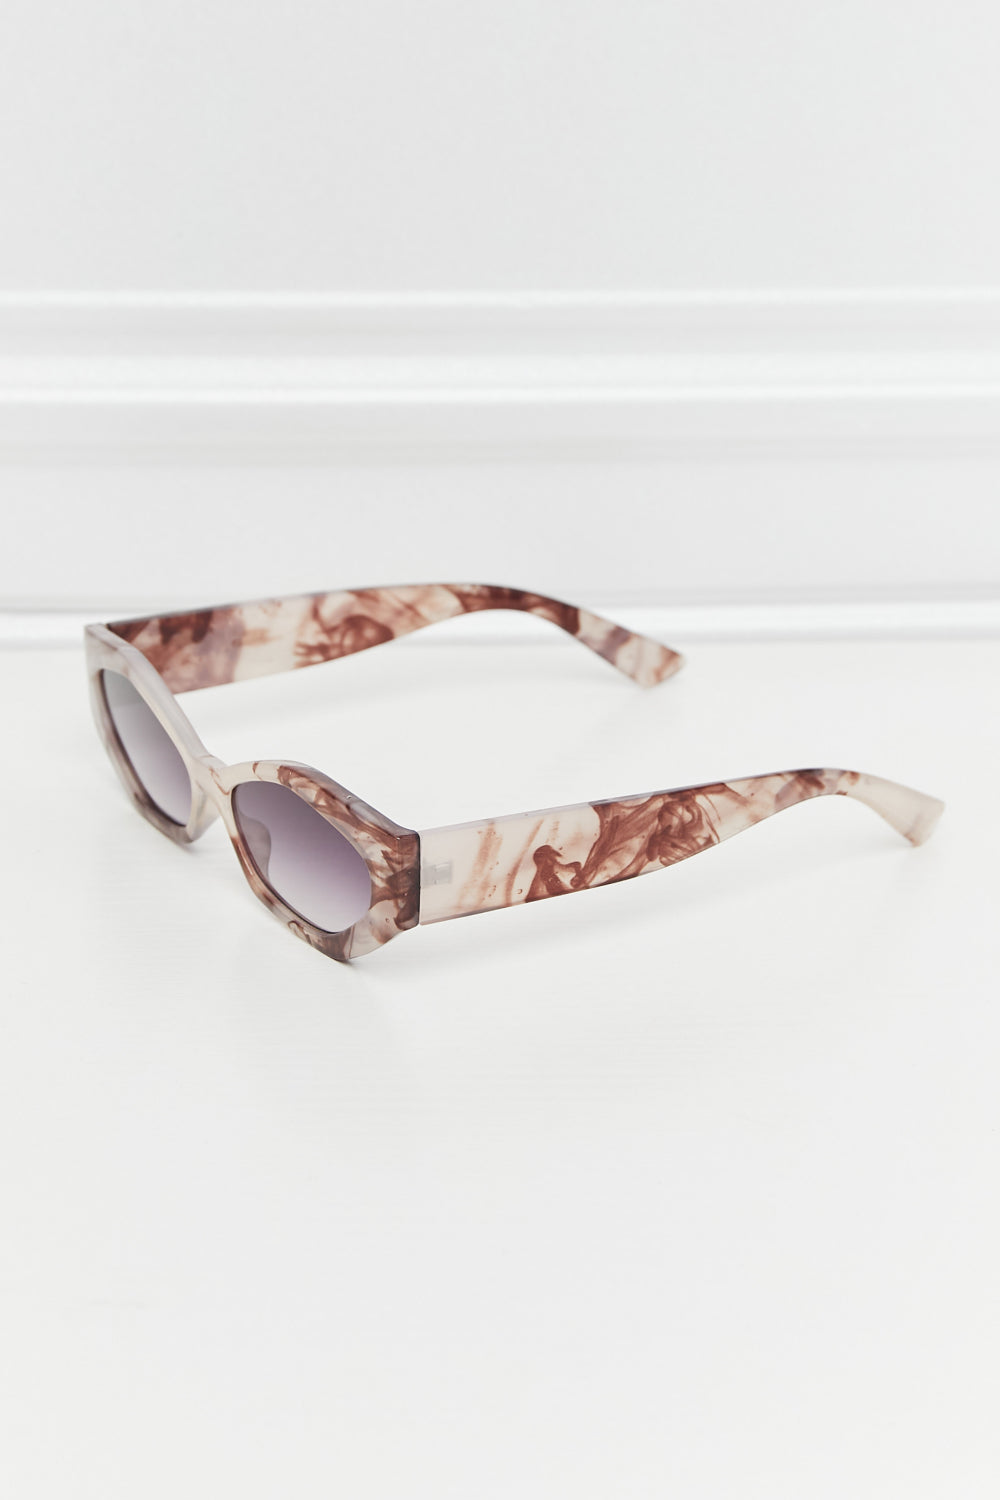 Traci K Collection Polycarbonate Frame Wayfarer Sunglasses